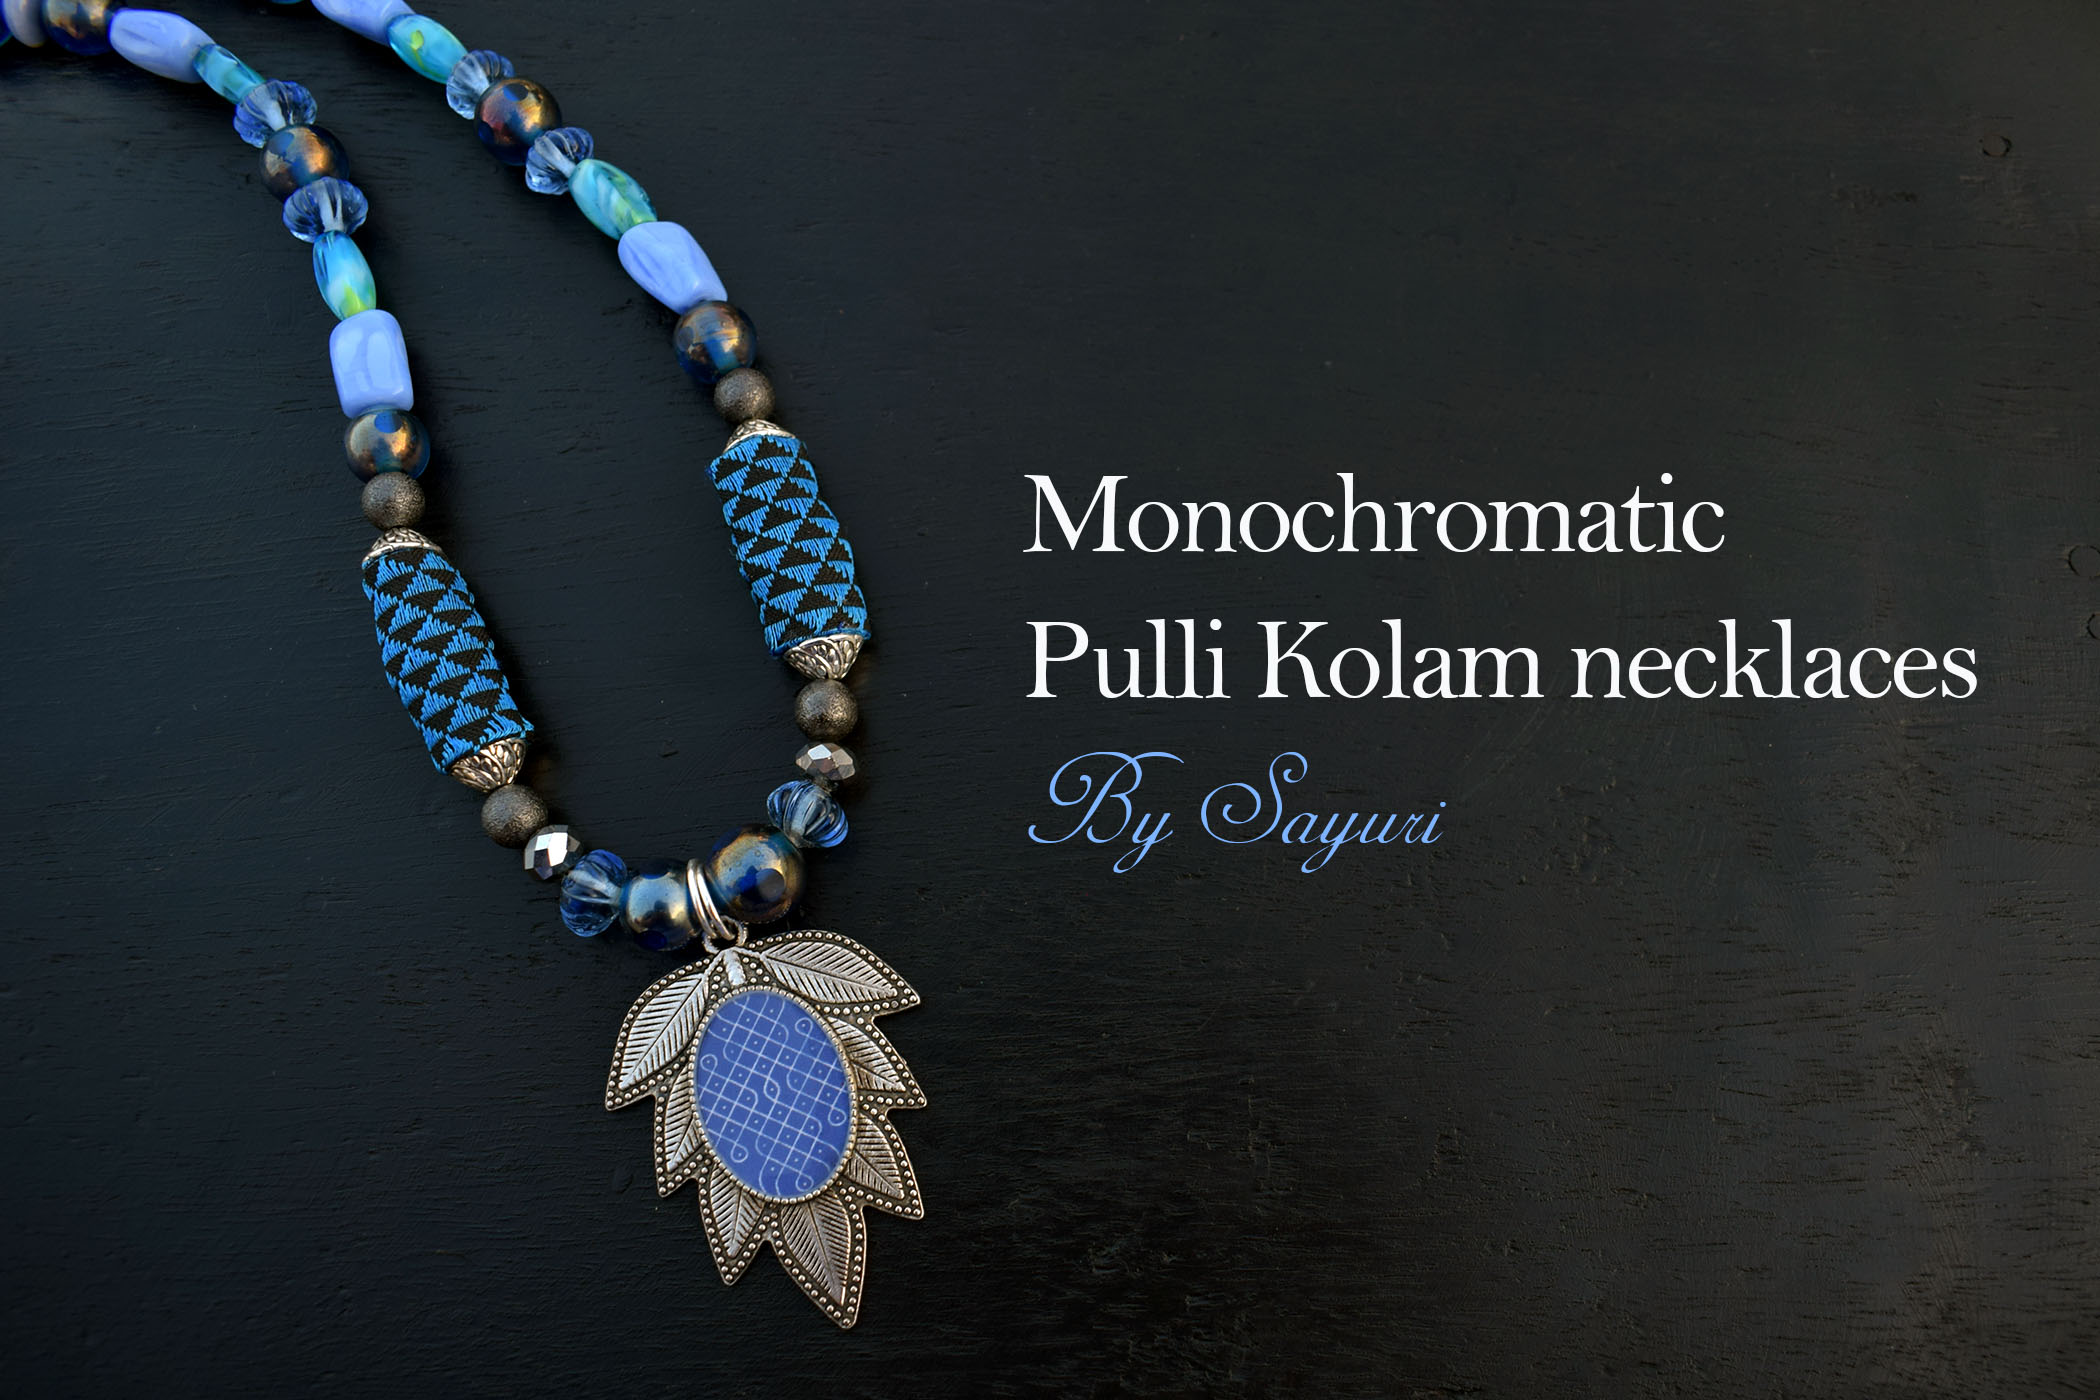 Monochromatic Pulli Kolam necklaces